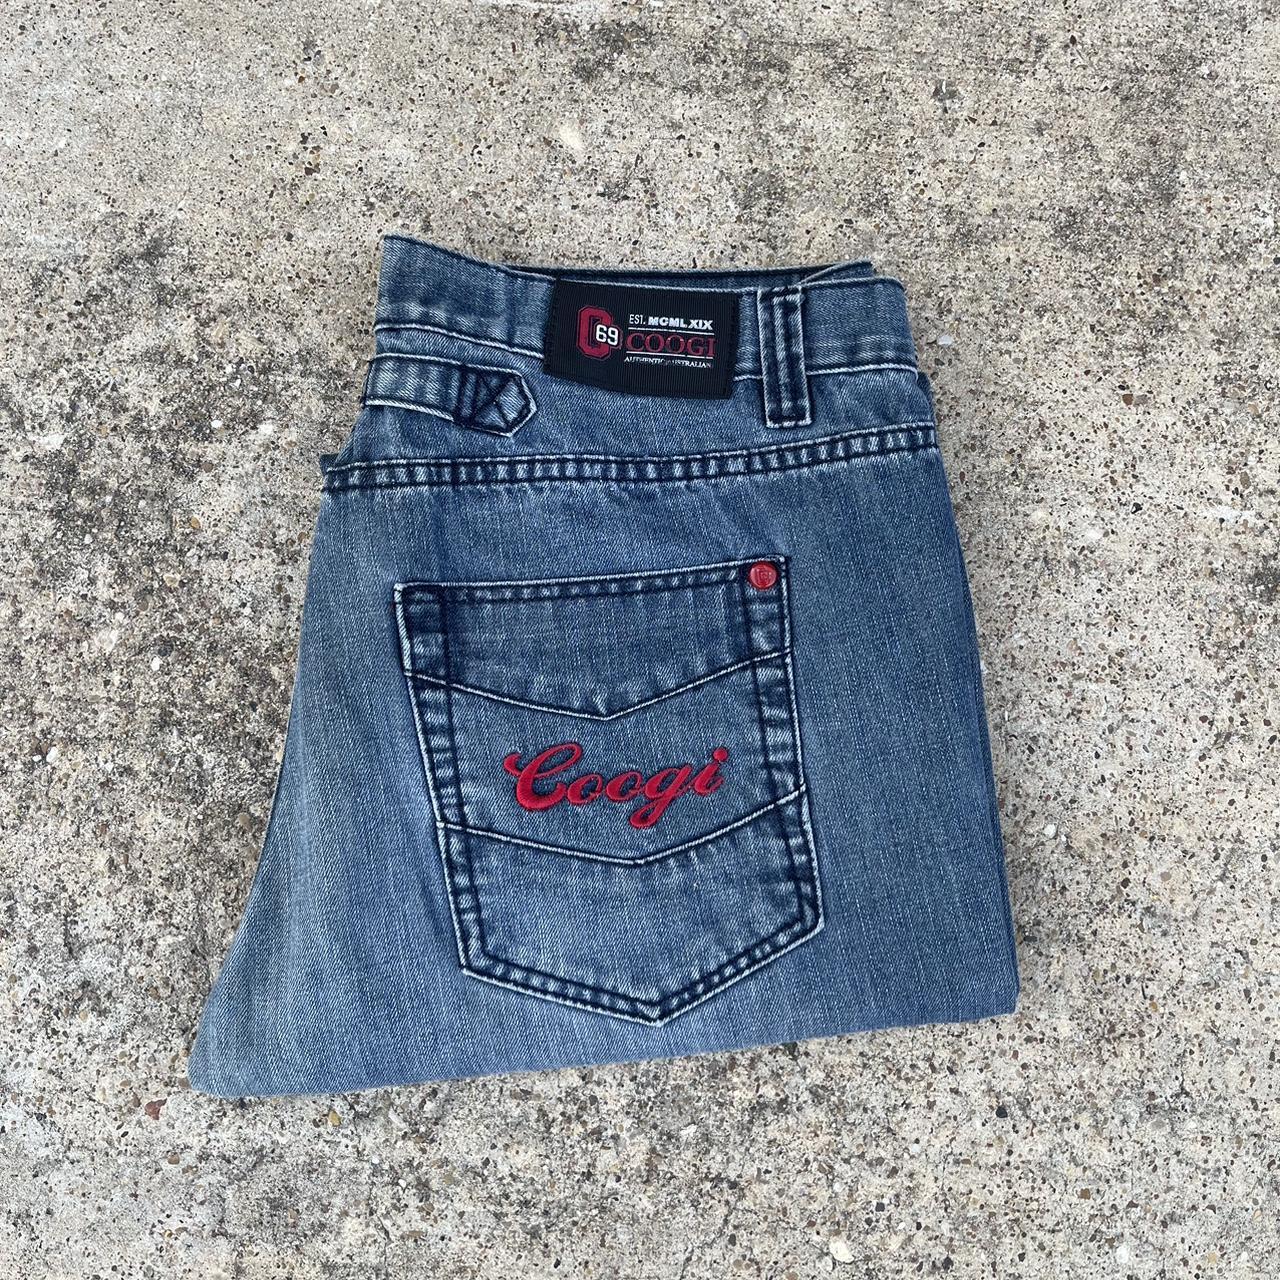 Coogi Men's Navy Jeans